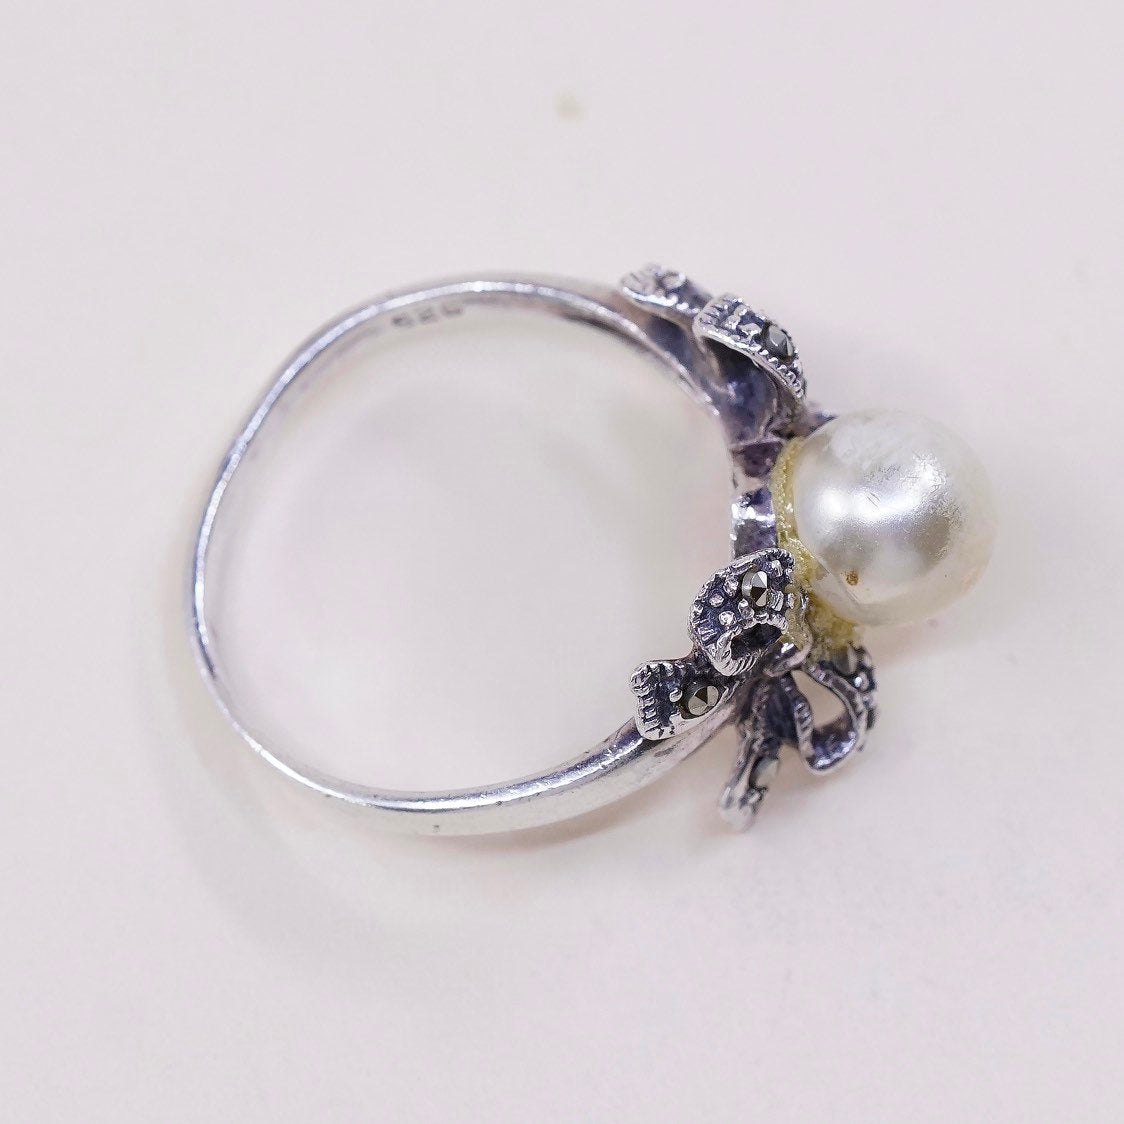 sz 6.75, vtg sterling silver handmade ring, 925 w/ faux pearl n marcasite